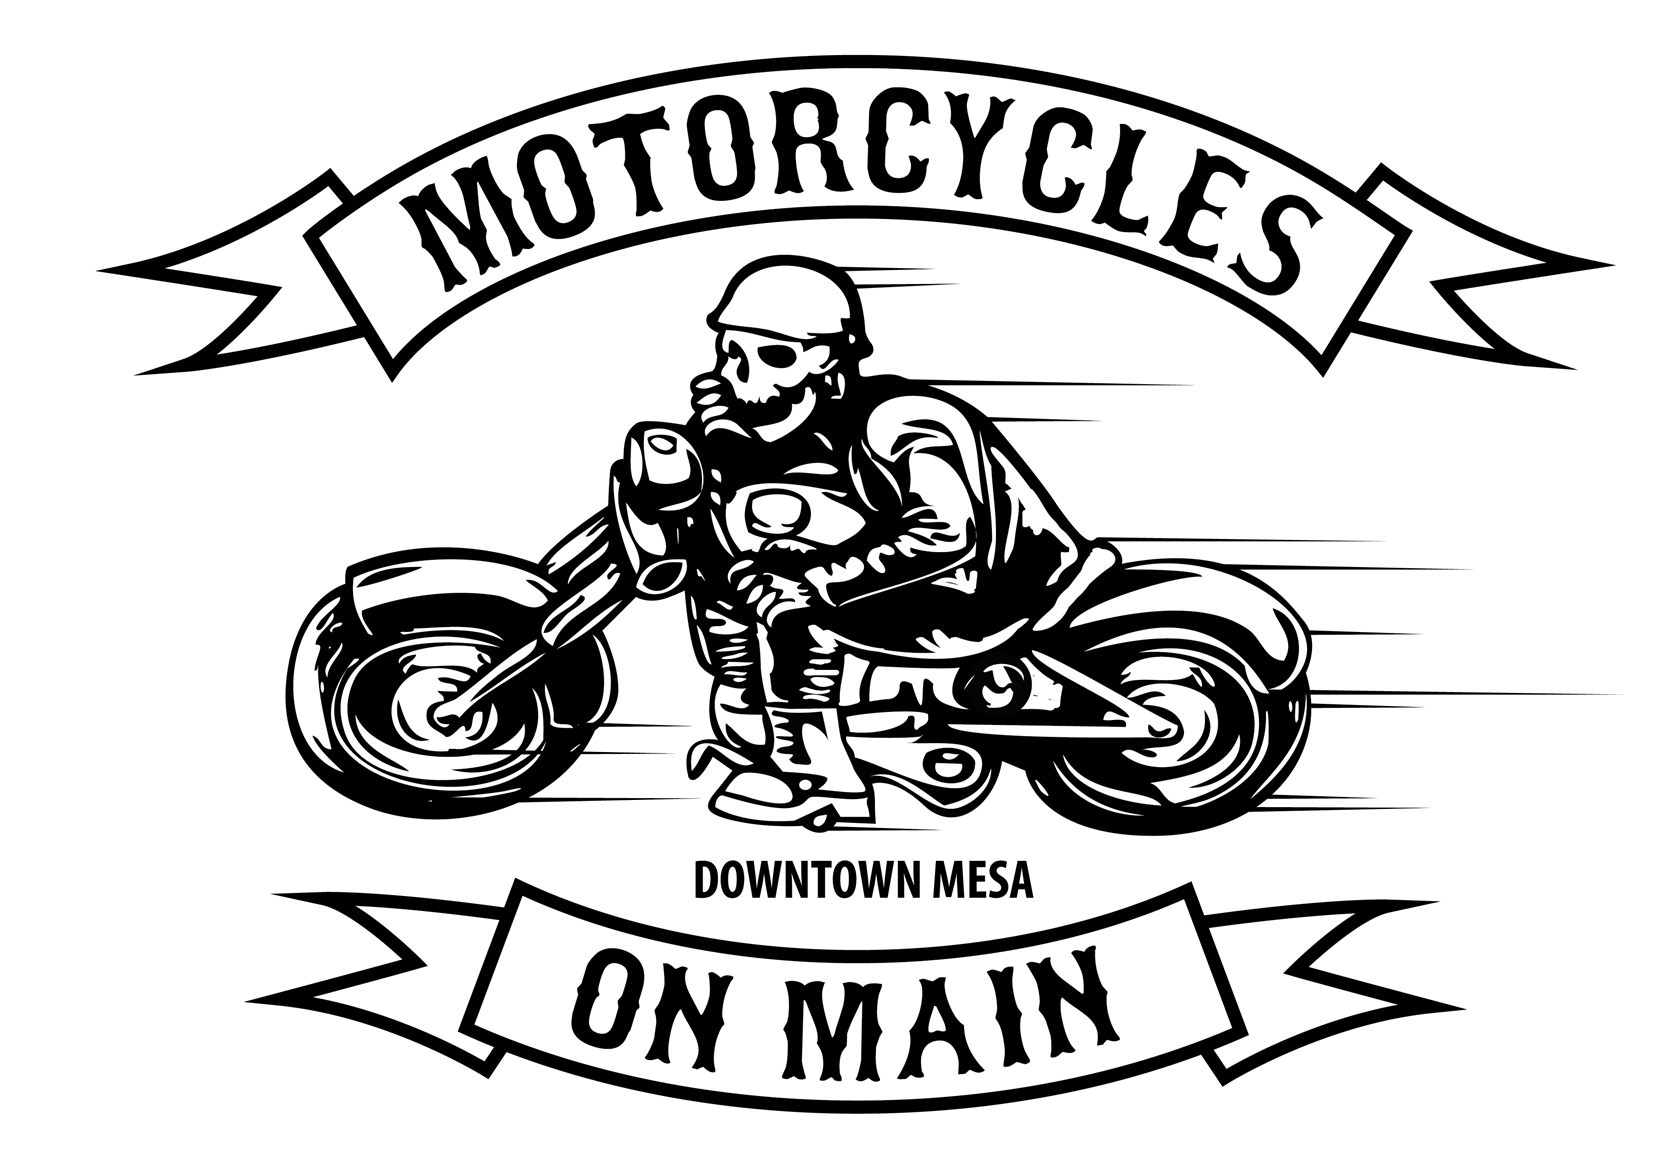 46 Victory Motorcycles Logo Wallpaper